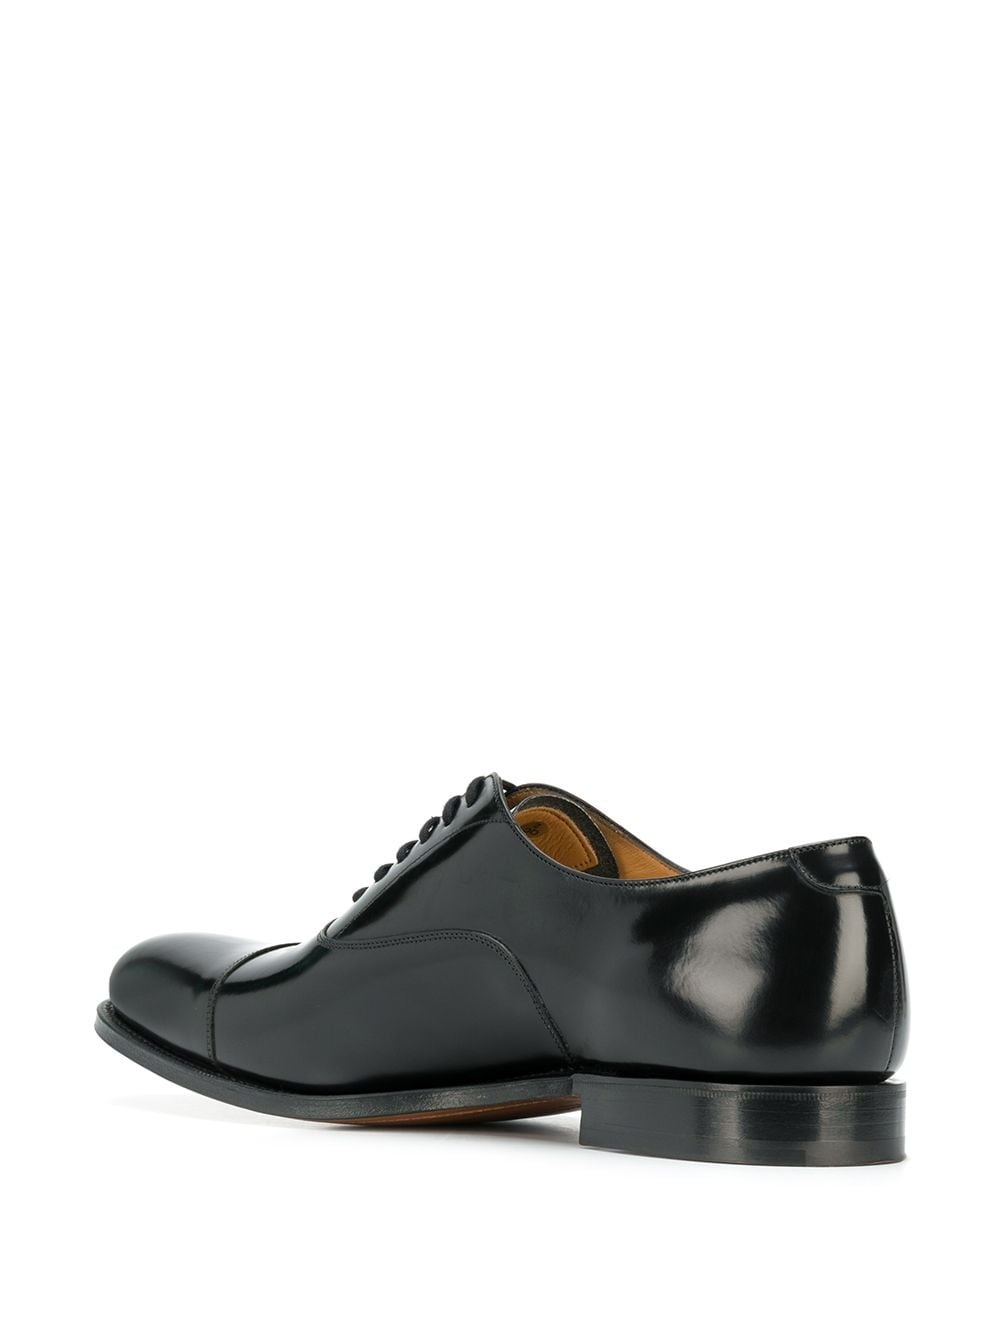 Leather shoe - 3